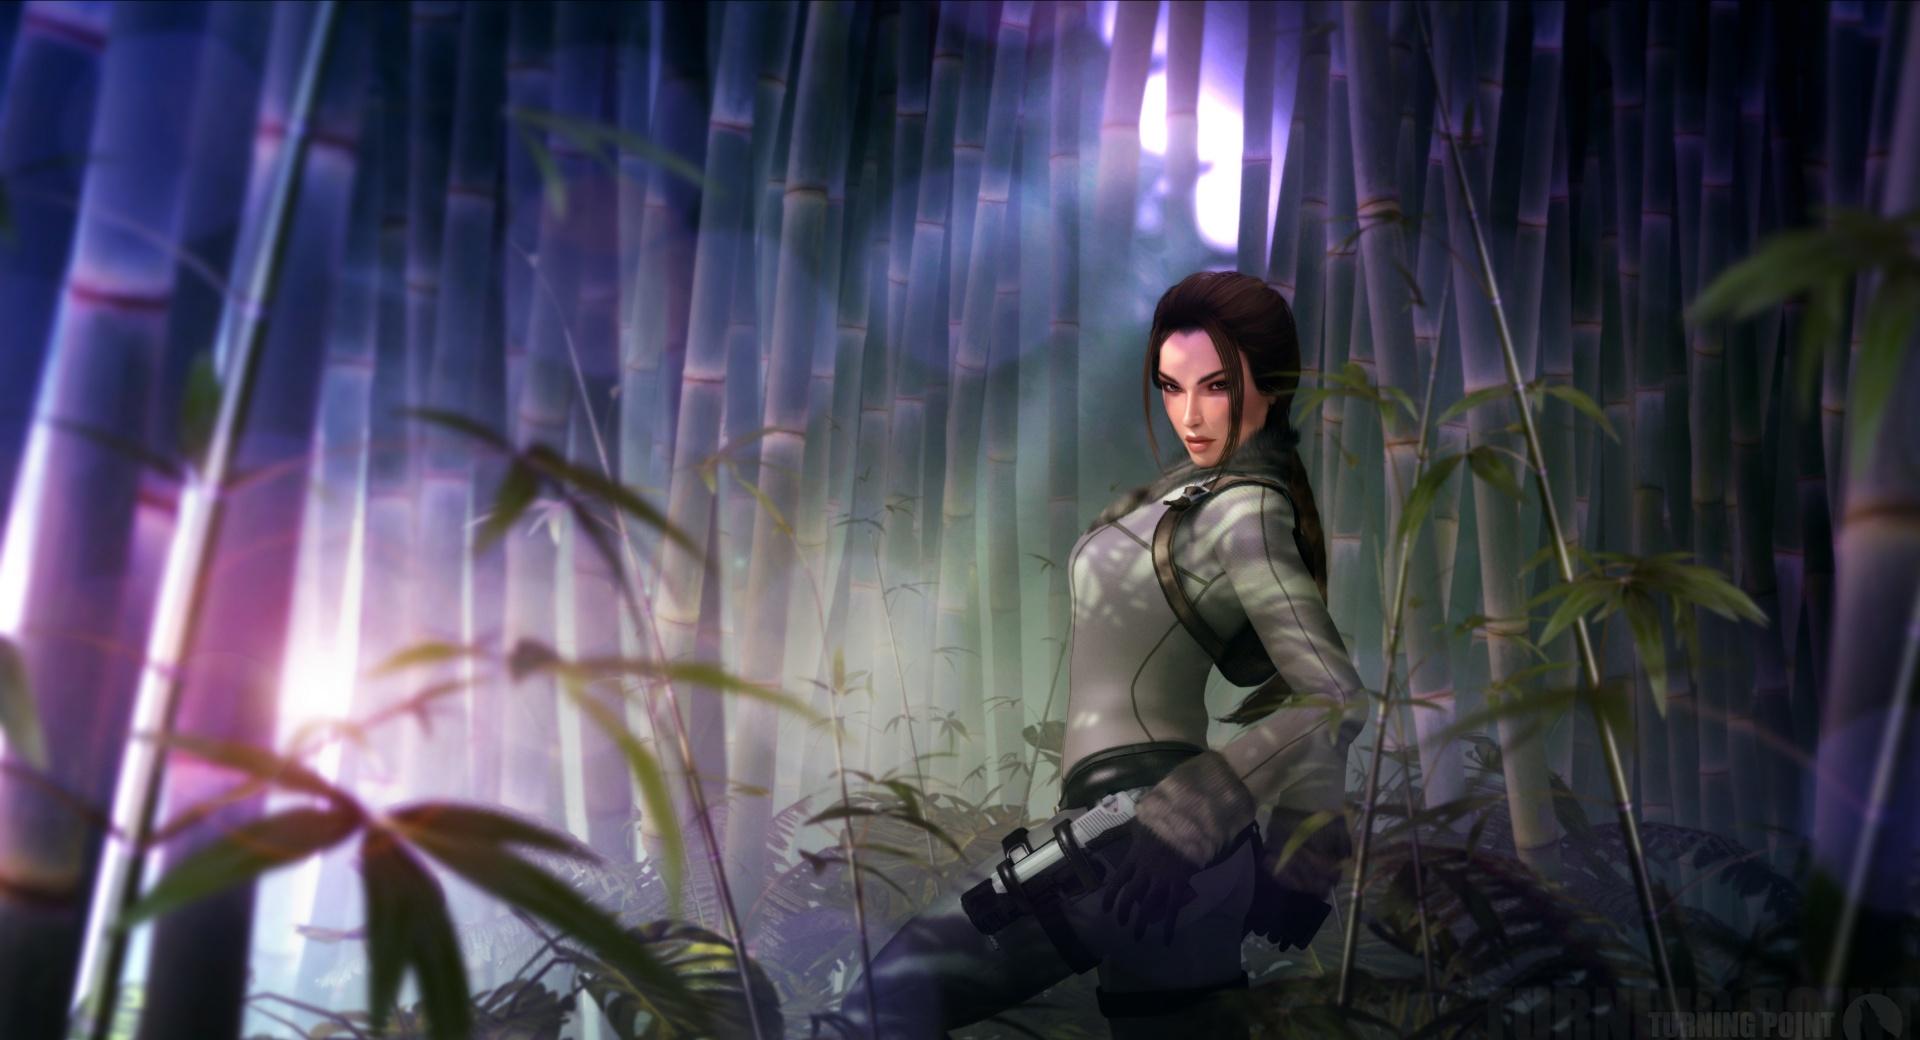 Lara Croft FanArt at 640 x 960 iPhone 4 size wallpapers HD quality